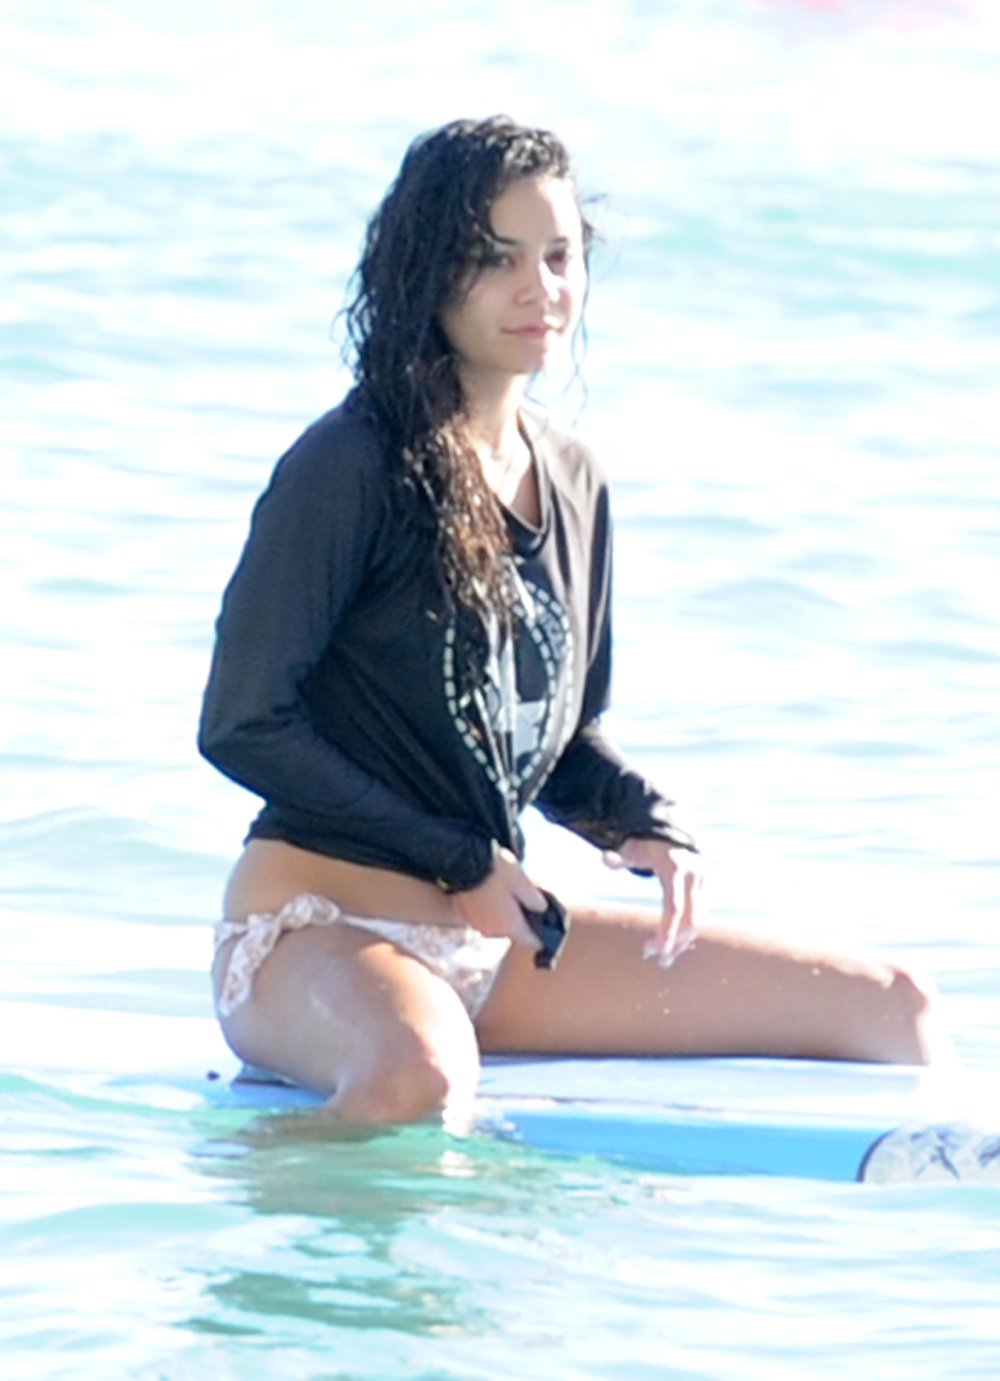 Vanessa Hudgens in a Bikini Surfing in Hawaii